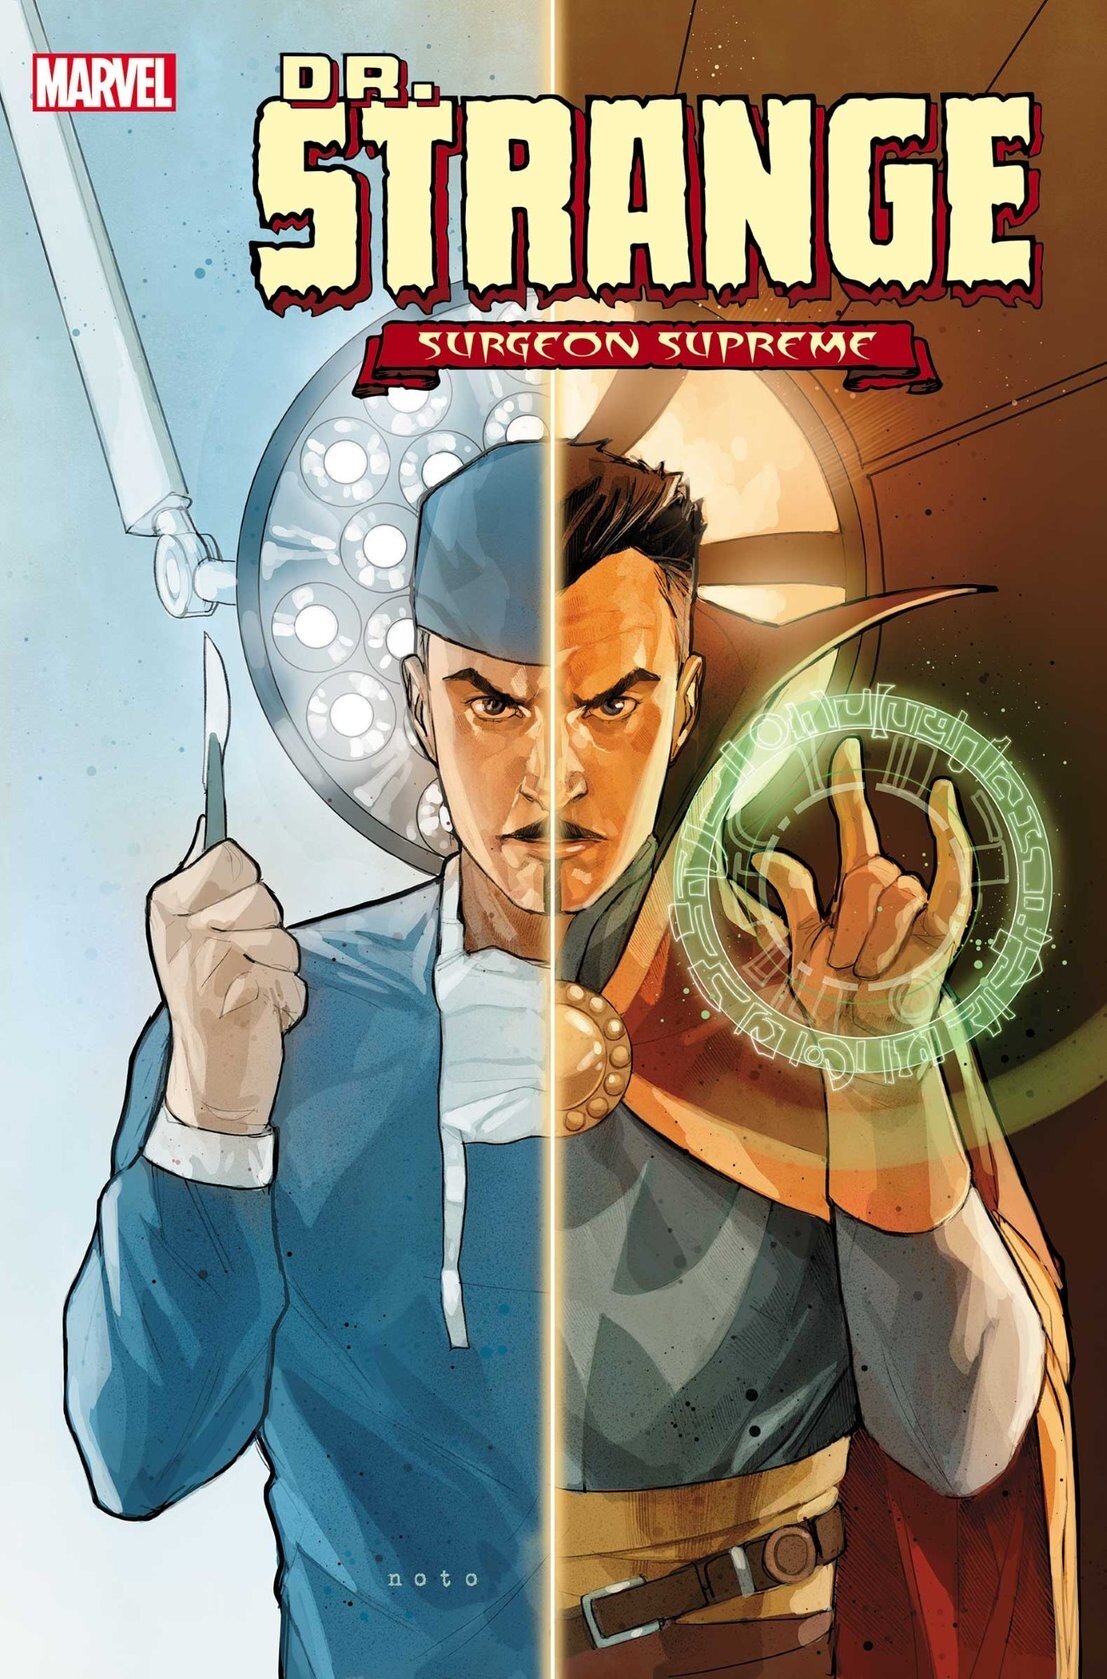 Dr-Strange-Surgeon-Supreme-Comic.jpeg